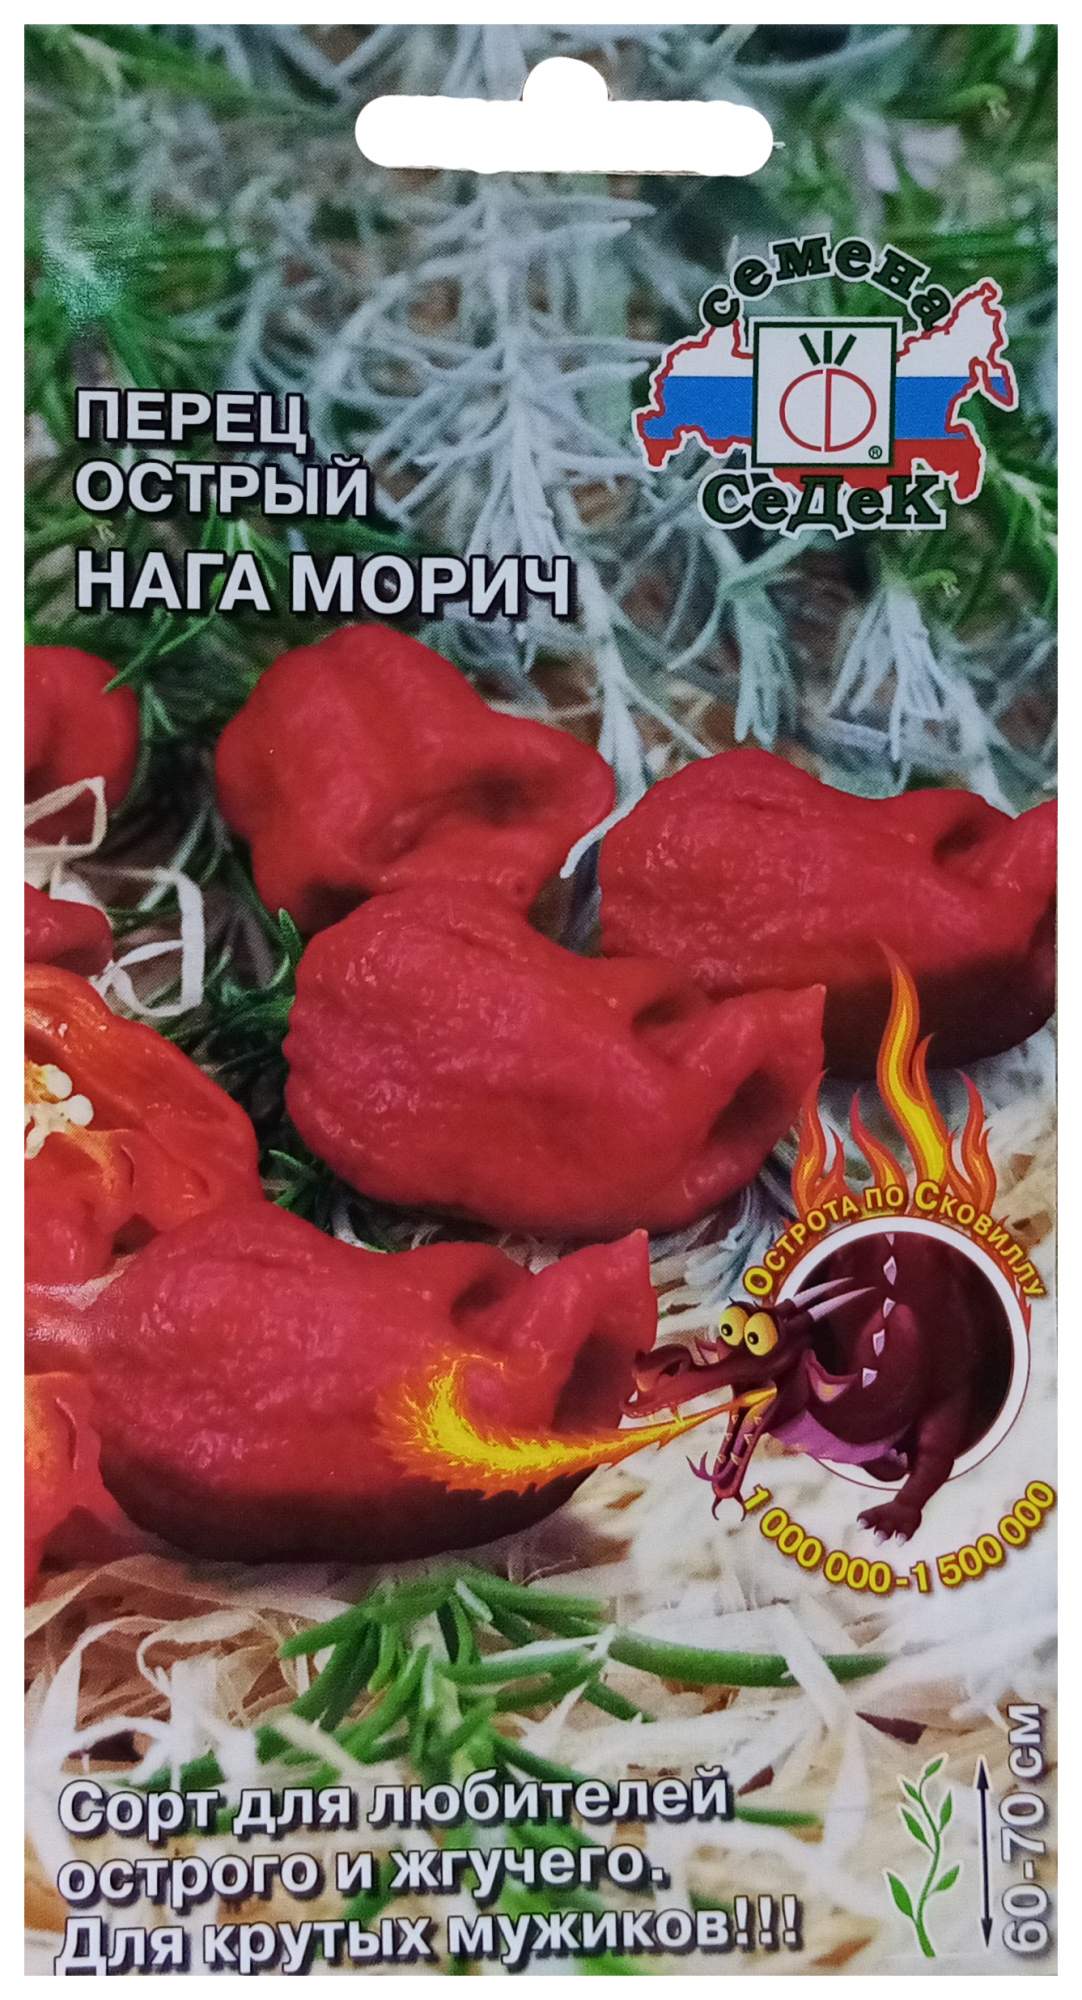  овощей перец острый Нага Морич СеДеК 12914 0,1 г -  в .